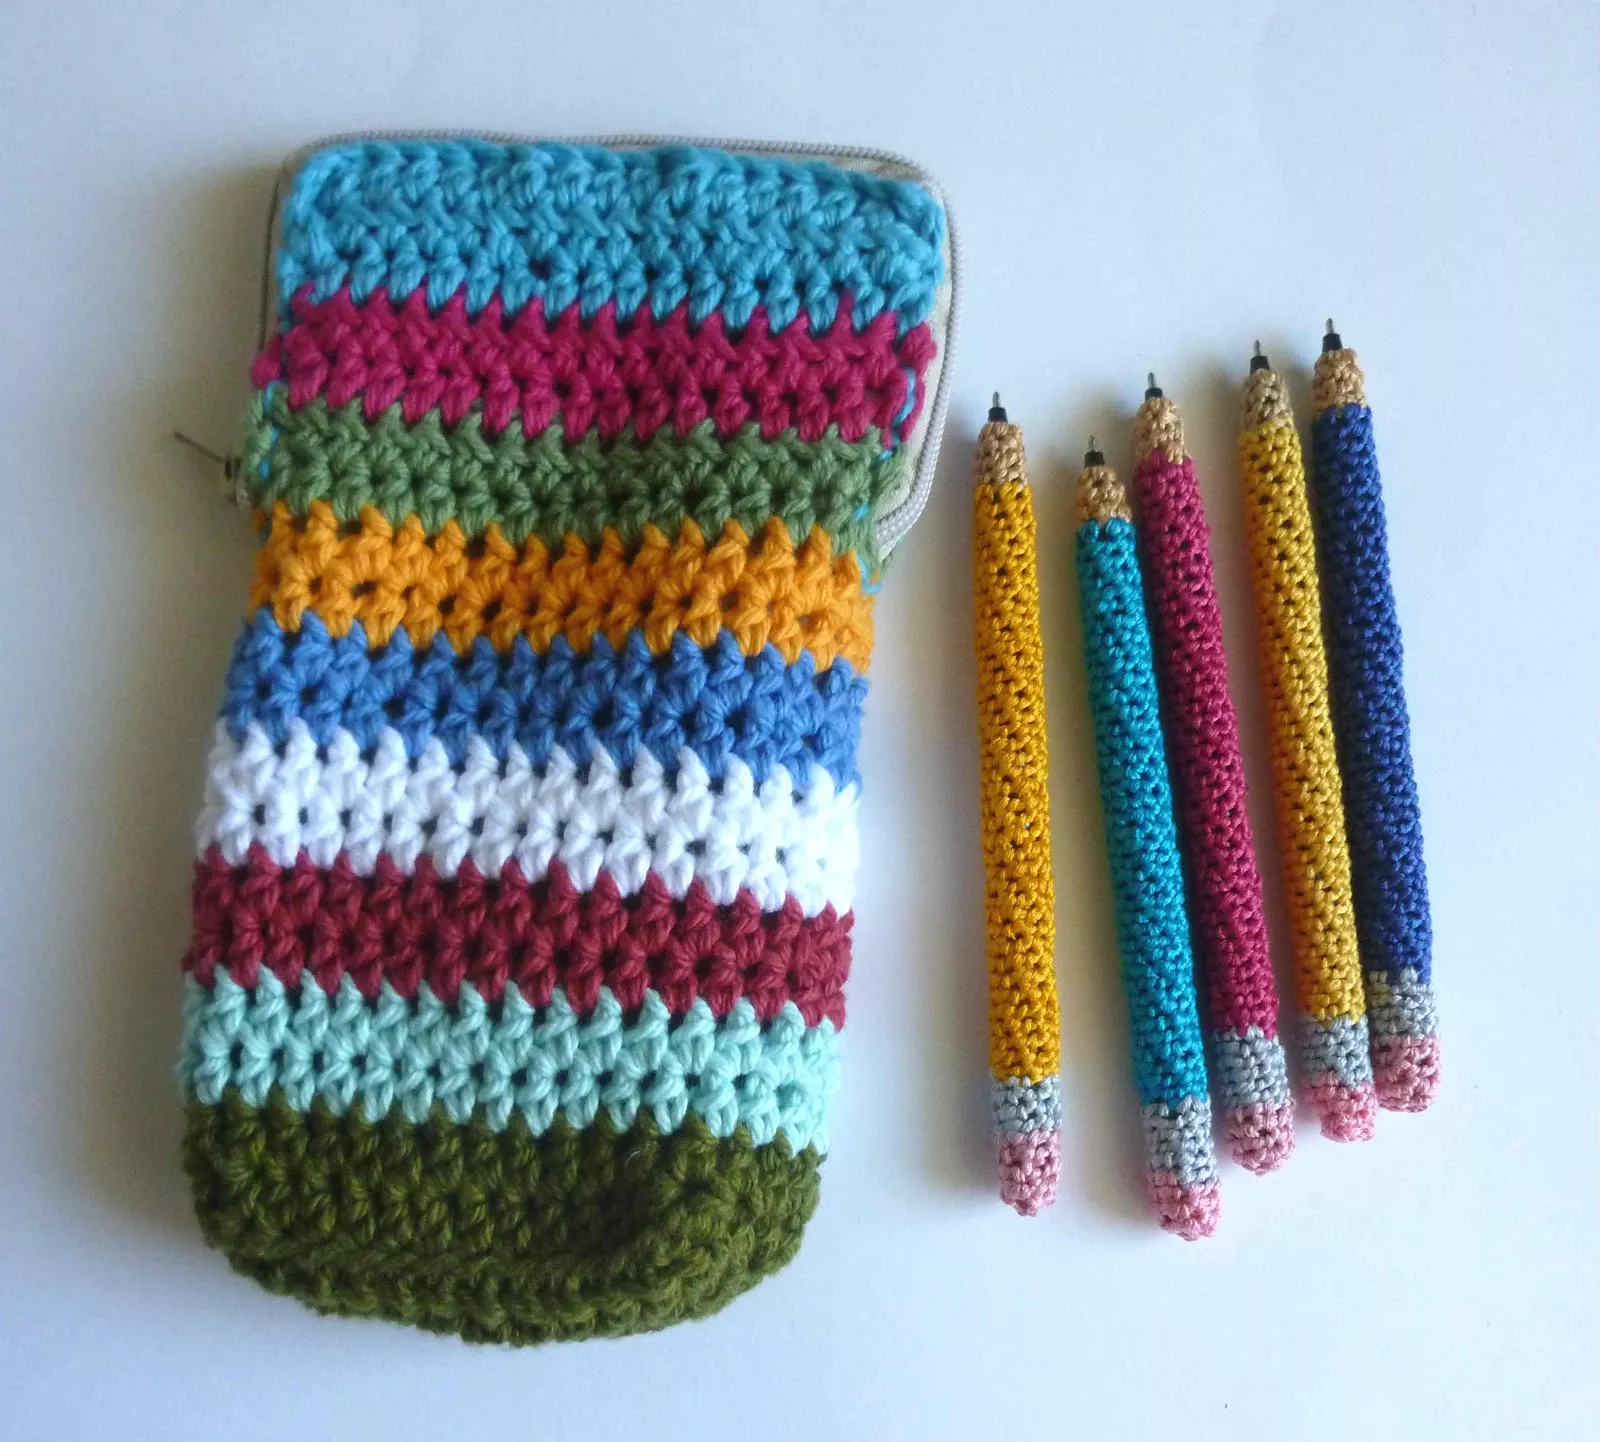 Pencil-Look Crochet Pen Covers